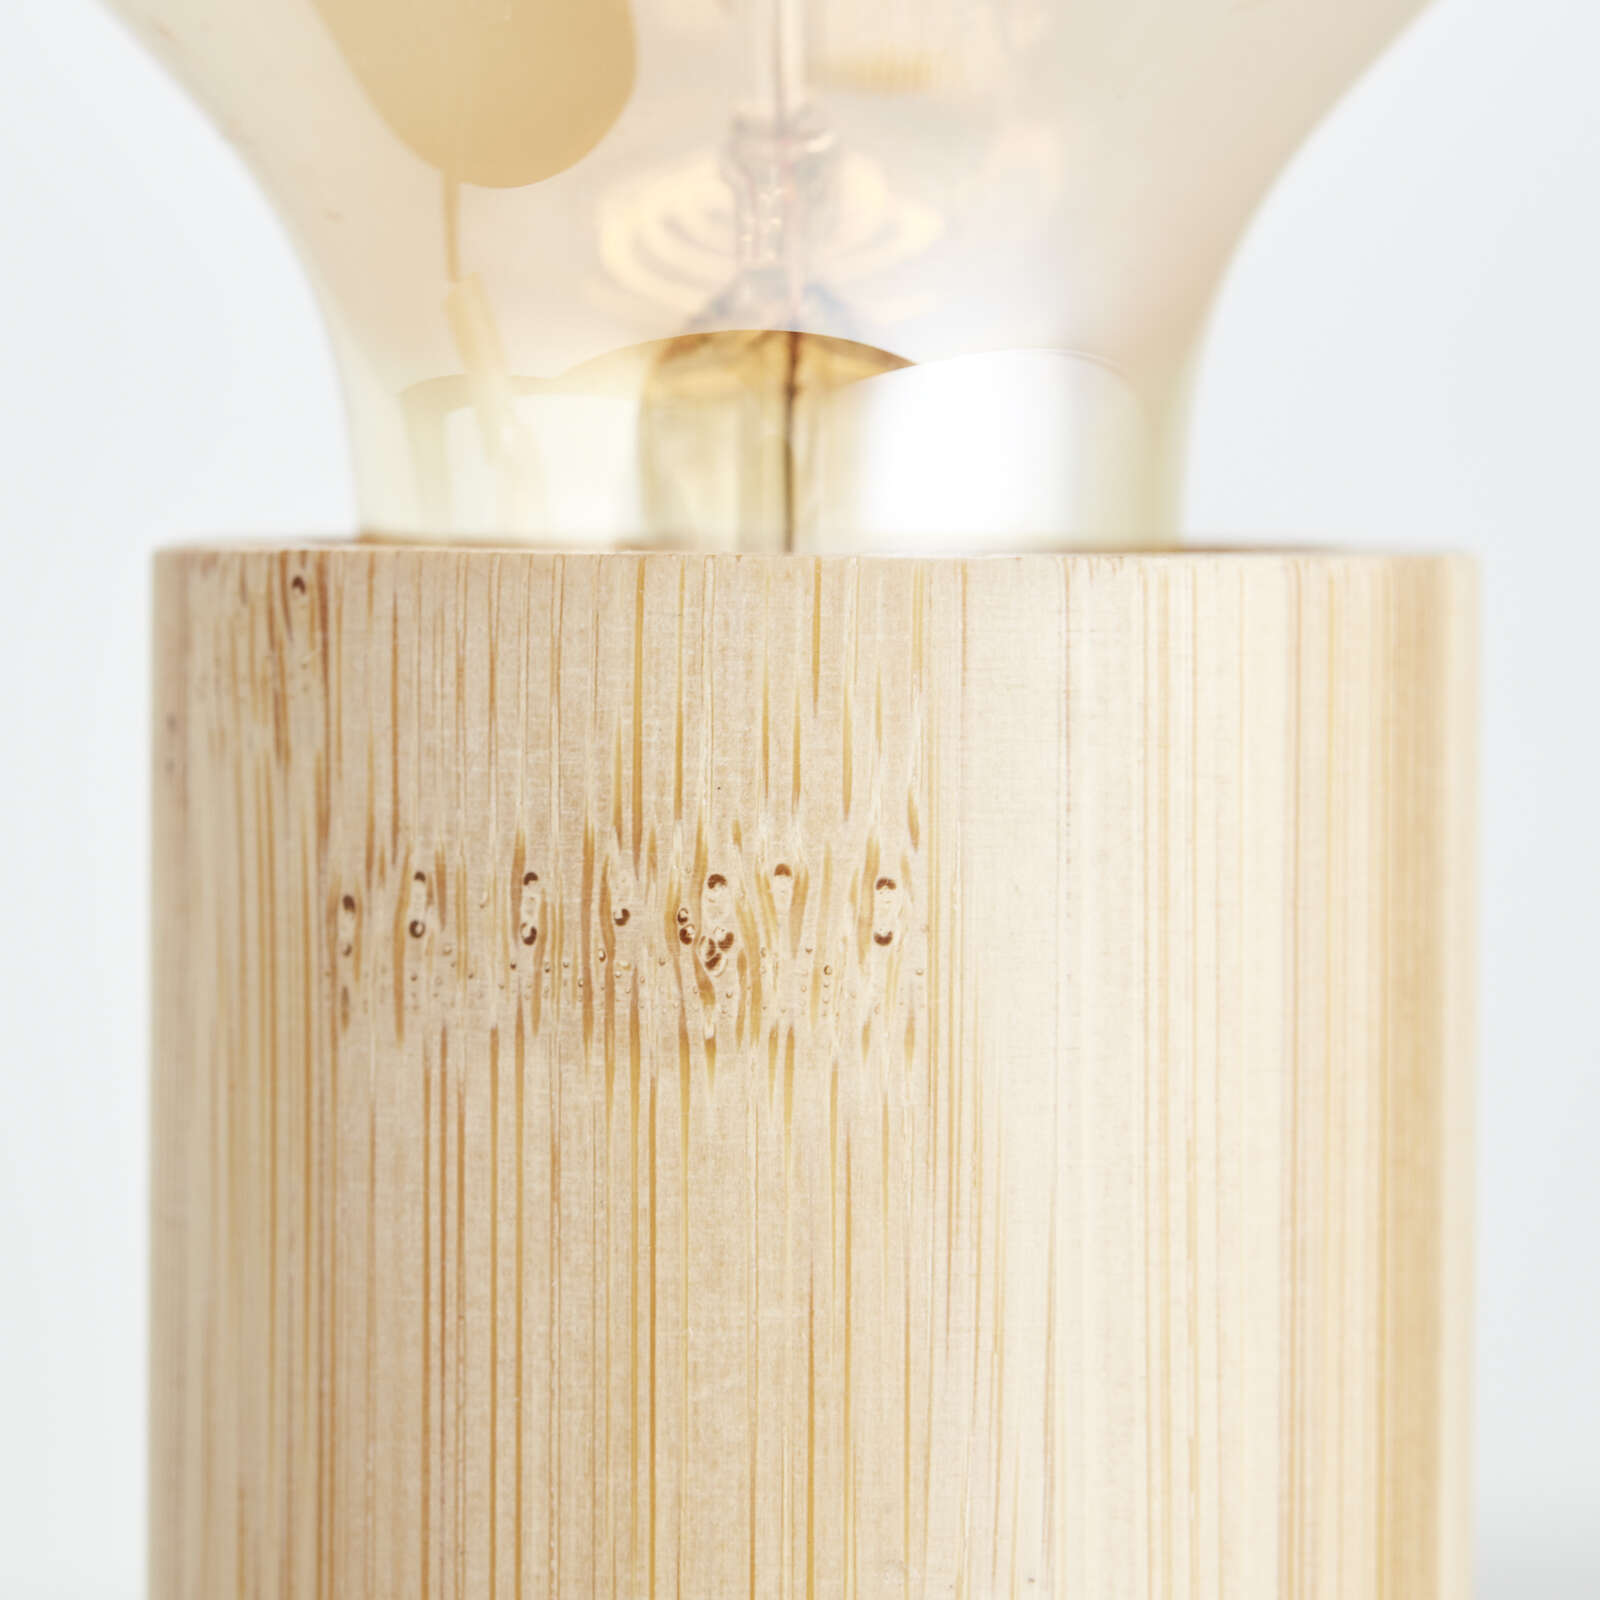             Spotlight tube made of bamboo - Rafael 2 - Brown
        